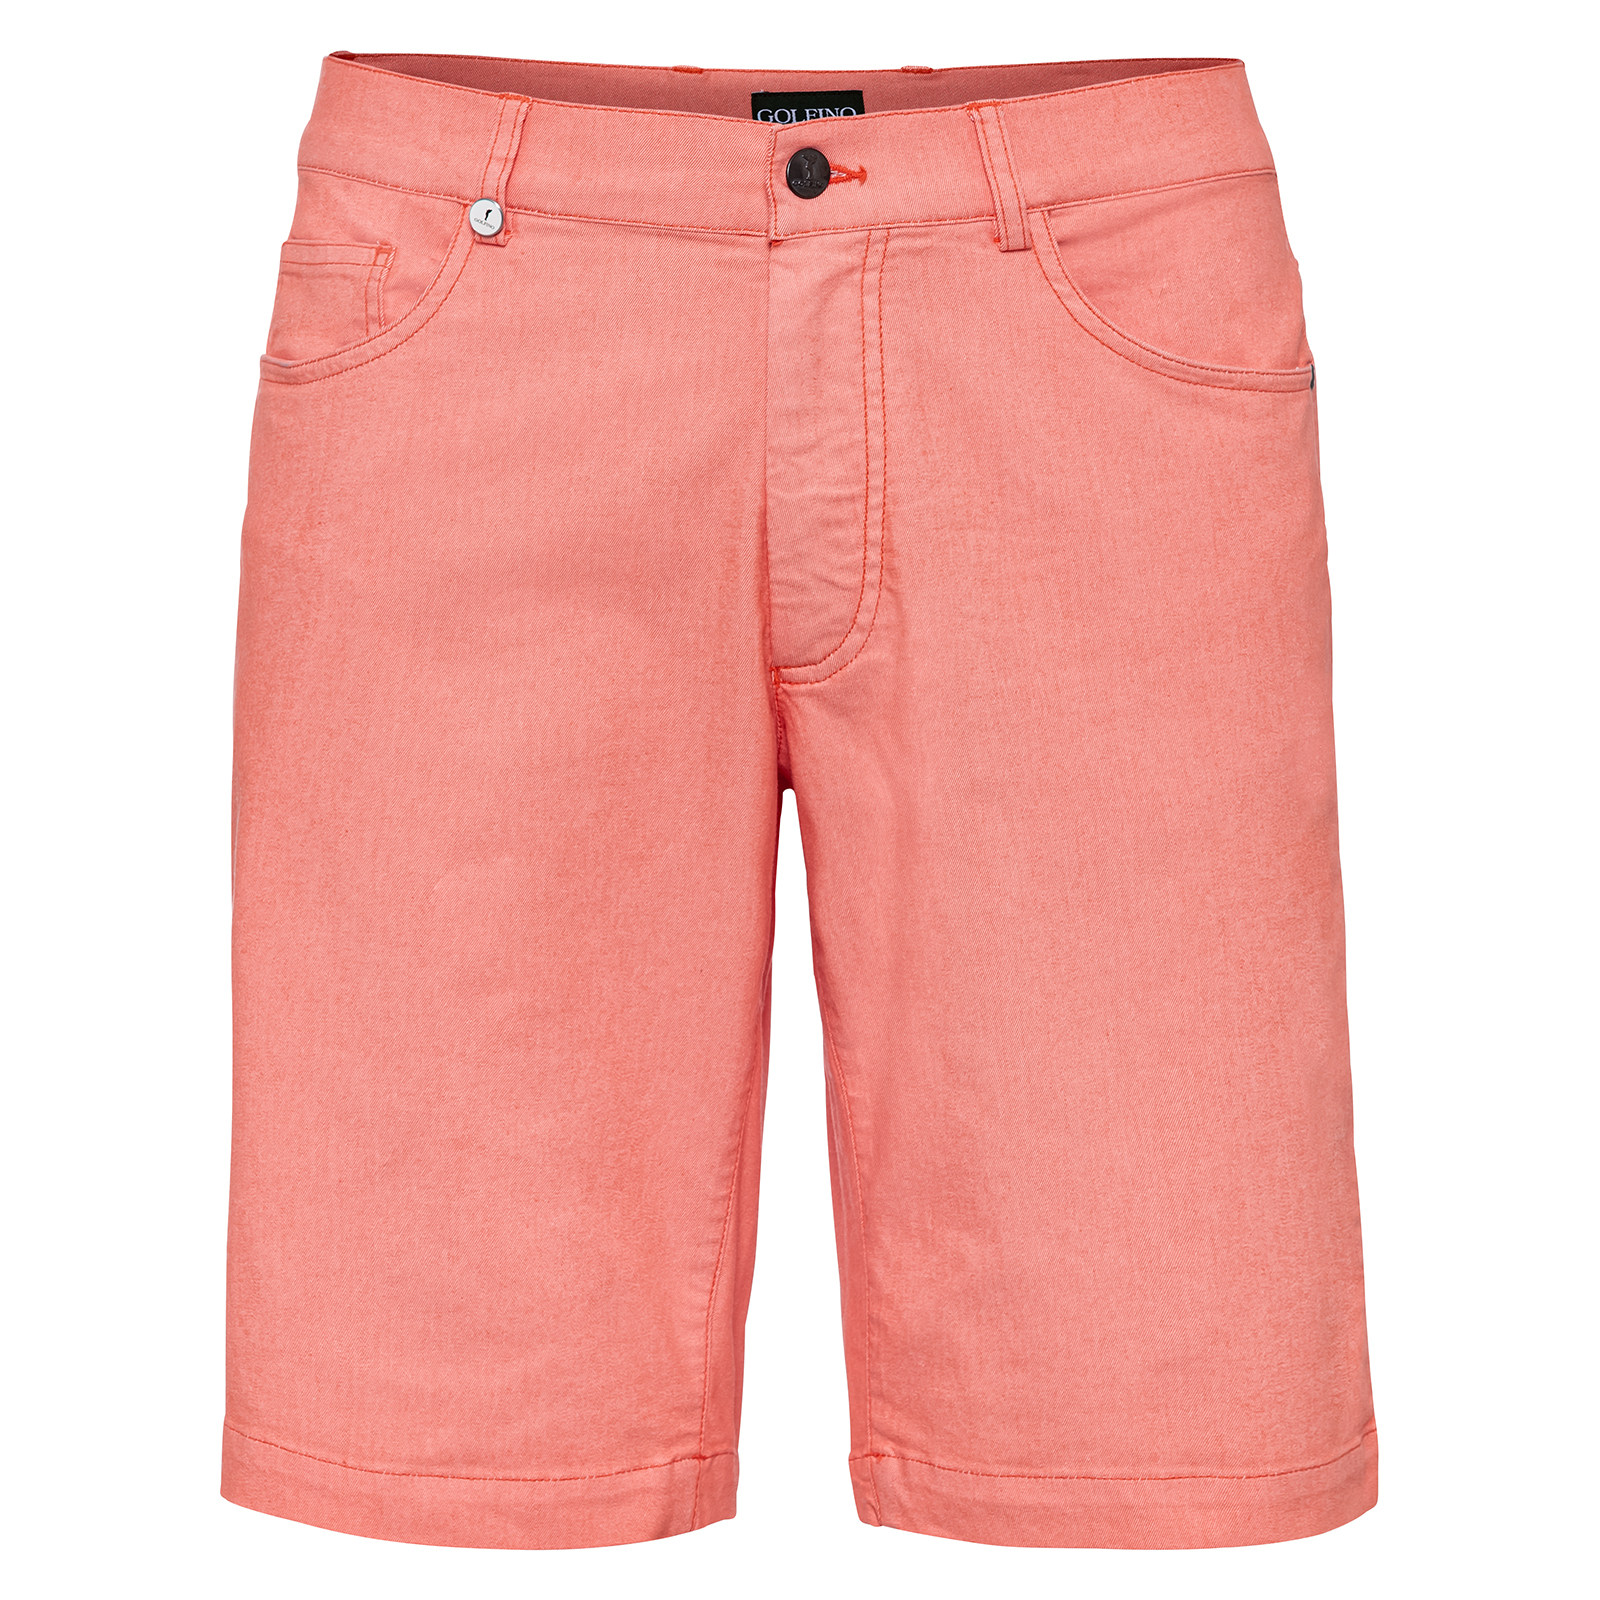 Fashionable 5-pocket style men's golf Bermuda shorts 